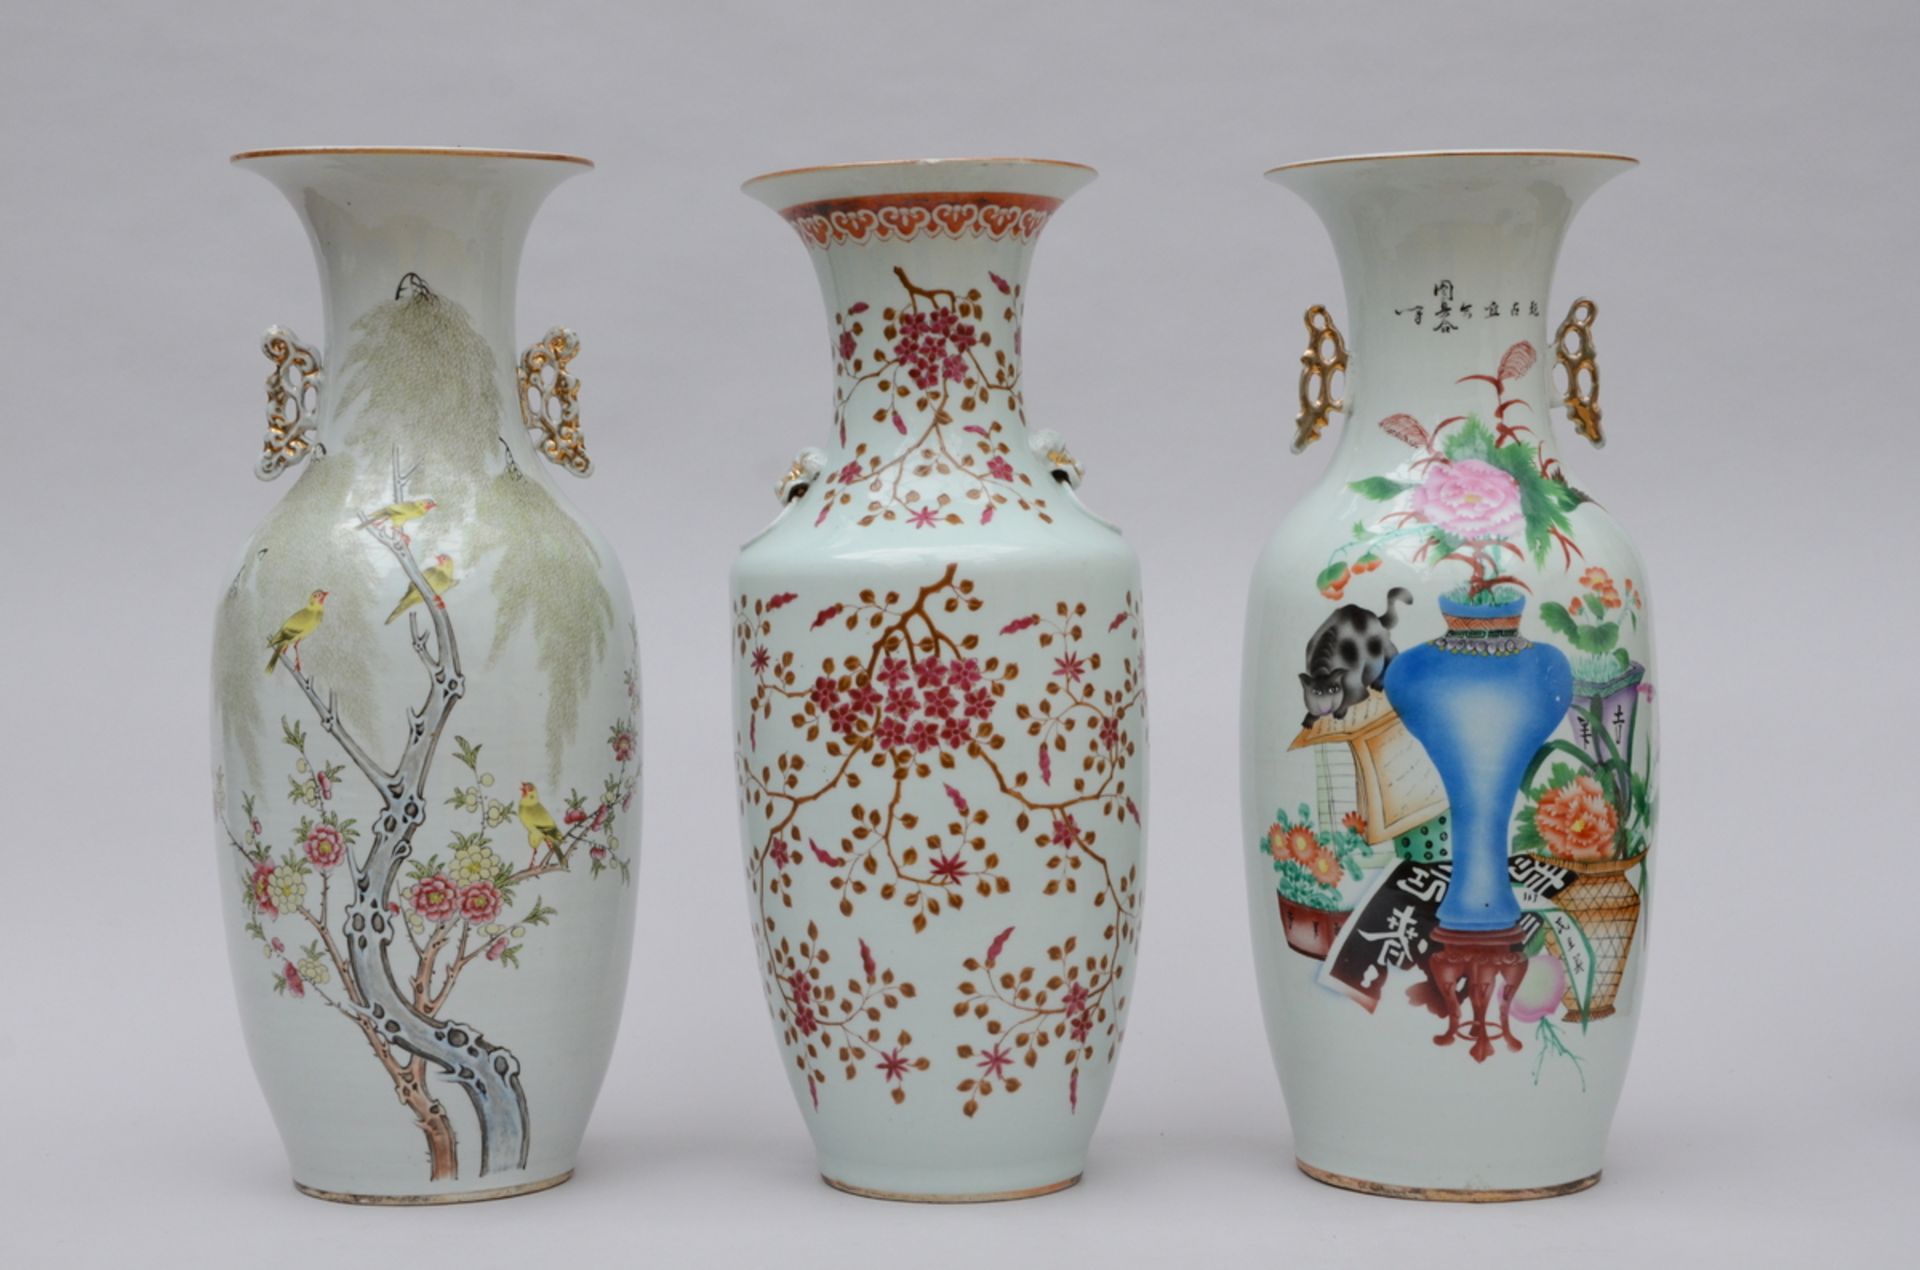 Lot: 3 Chinese vases 'antiquities', 'birds', 'flowers' (H 57.5, 58, 57 cm)